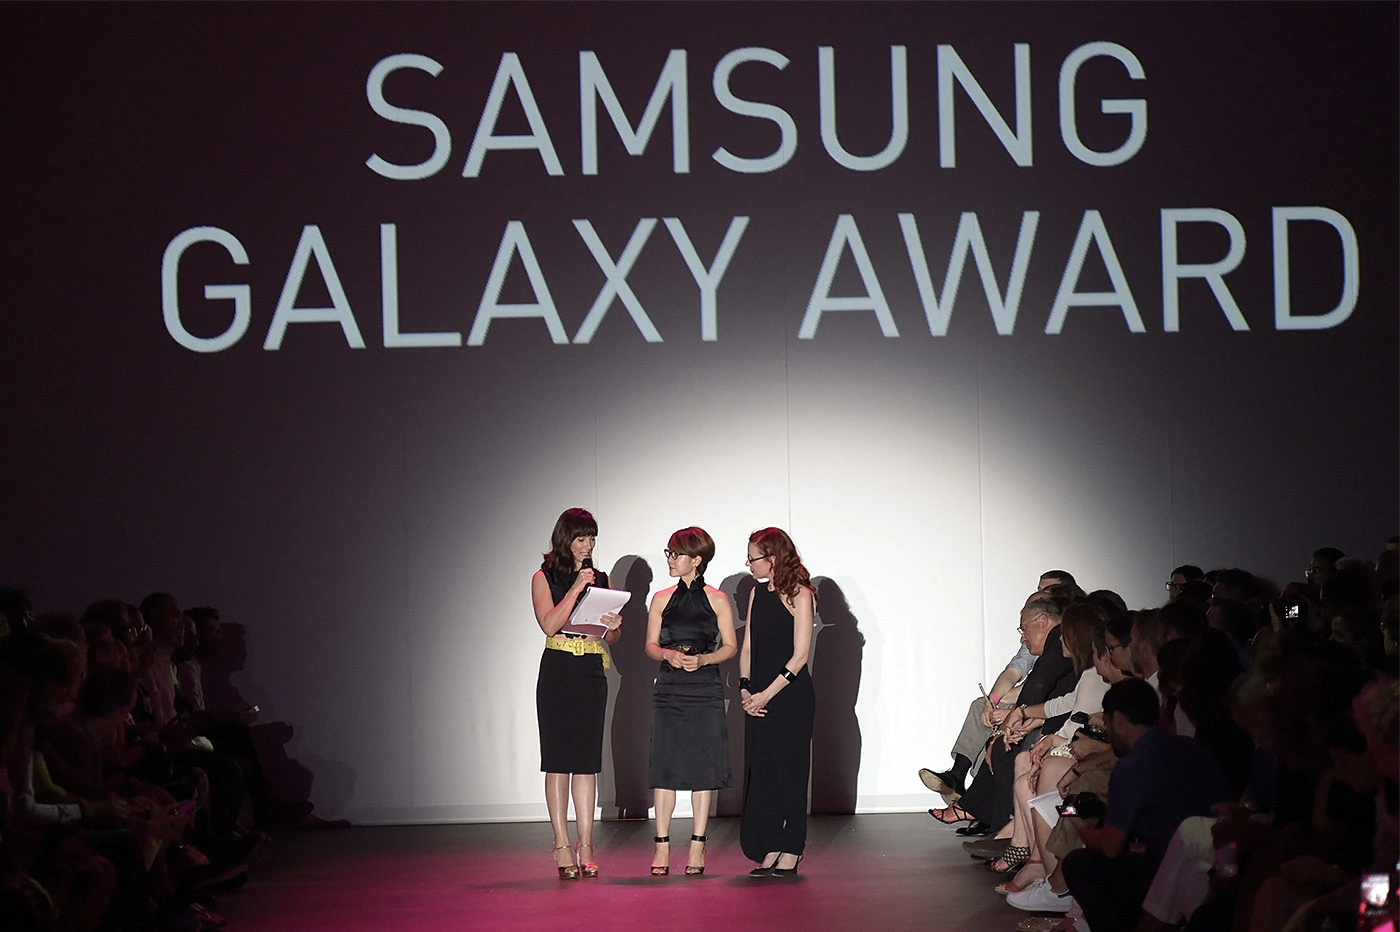 Samsung Galaxy Award